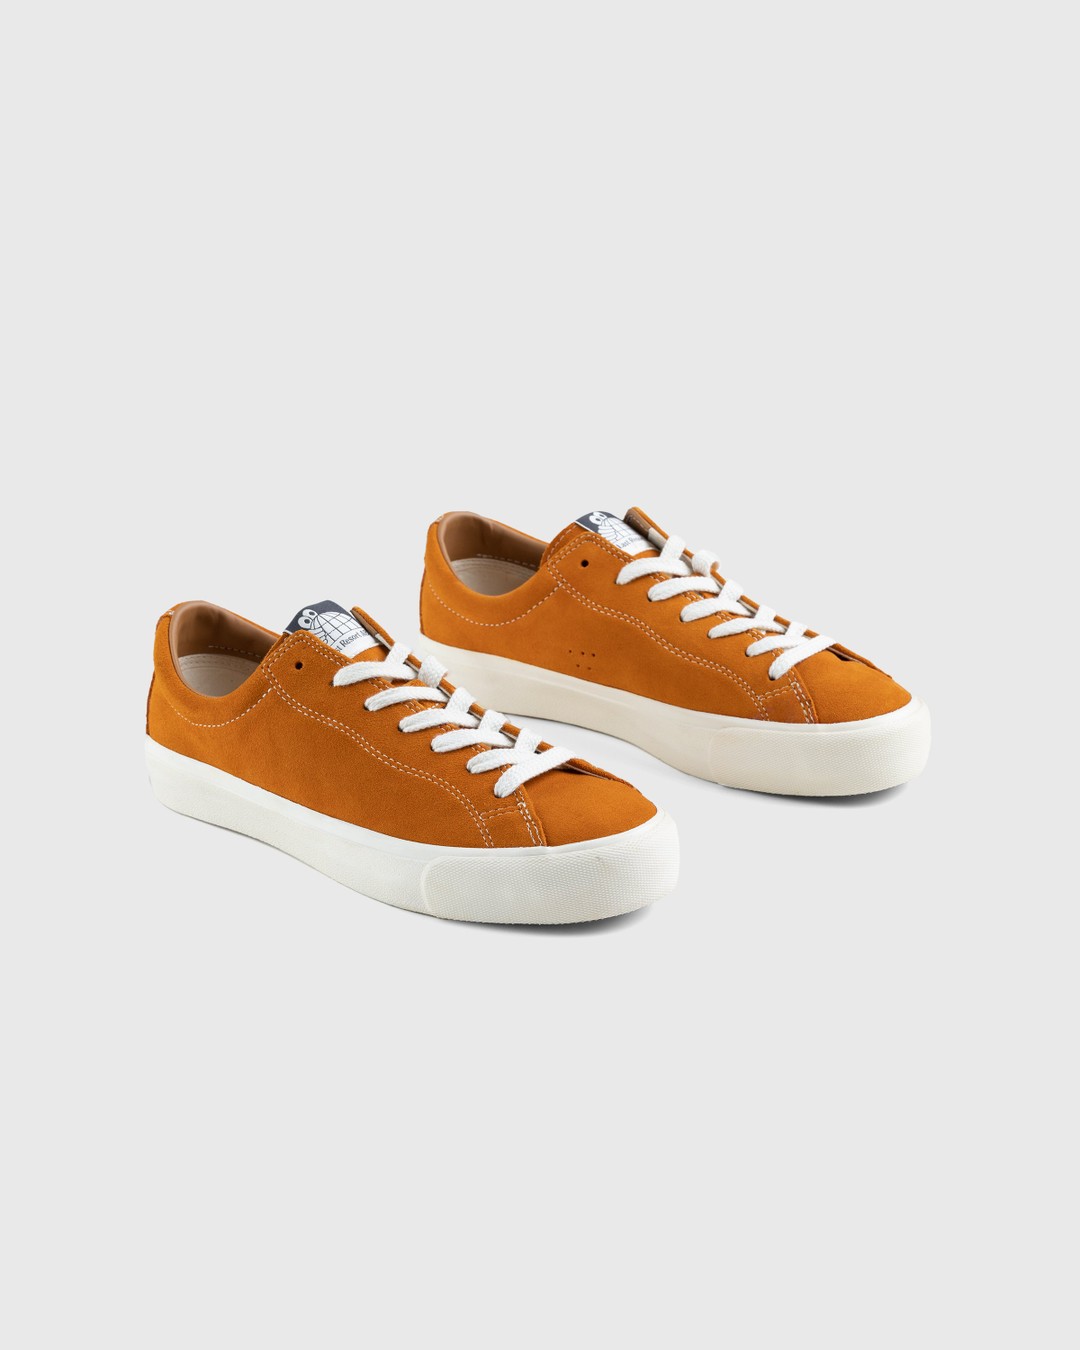 Last Resort AB – VM003 Suede Lo Cheddar/White - Sneakers - Orange - Image 4